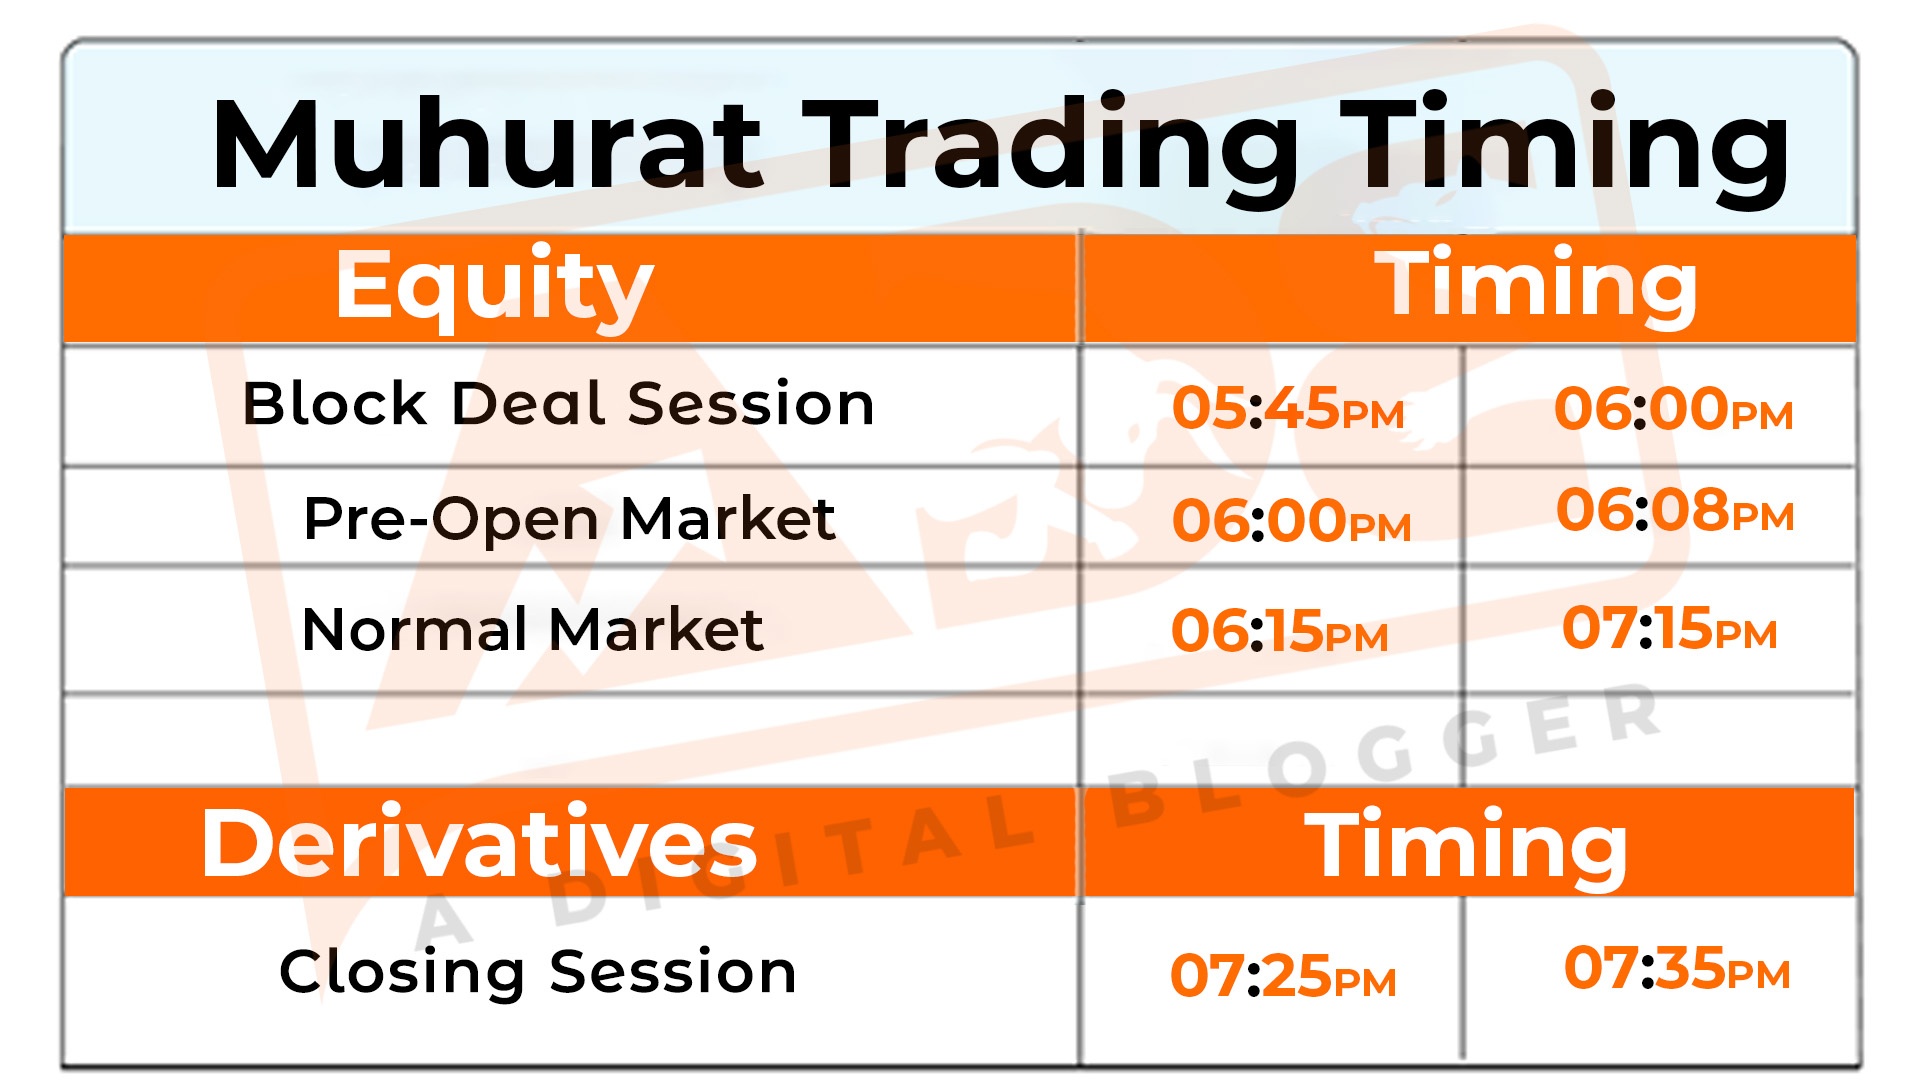 Muhurat Trading Timing